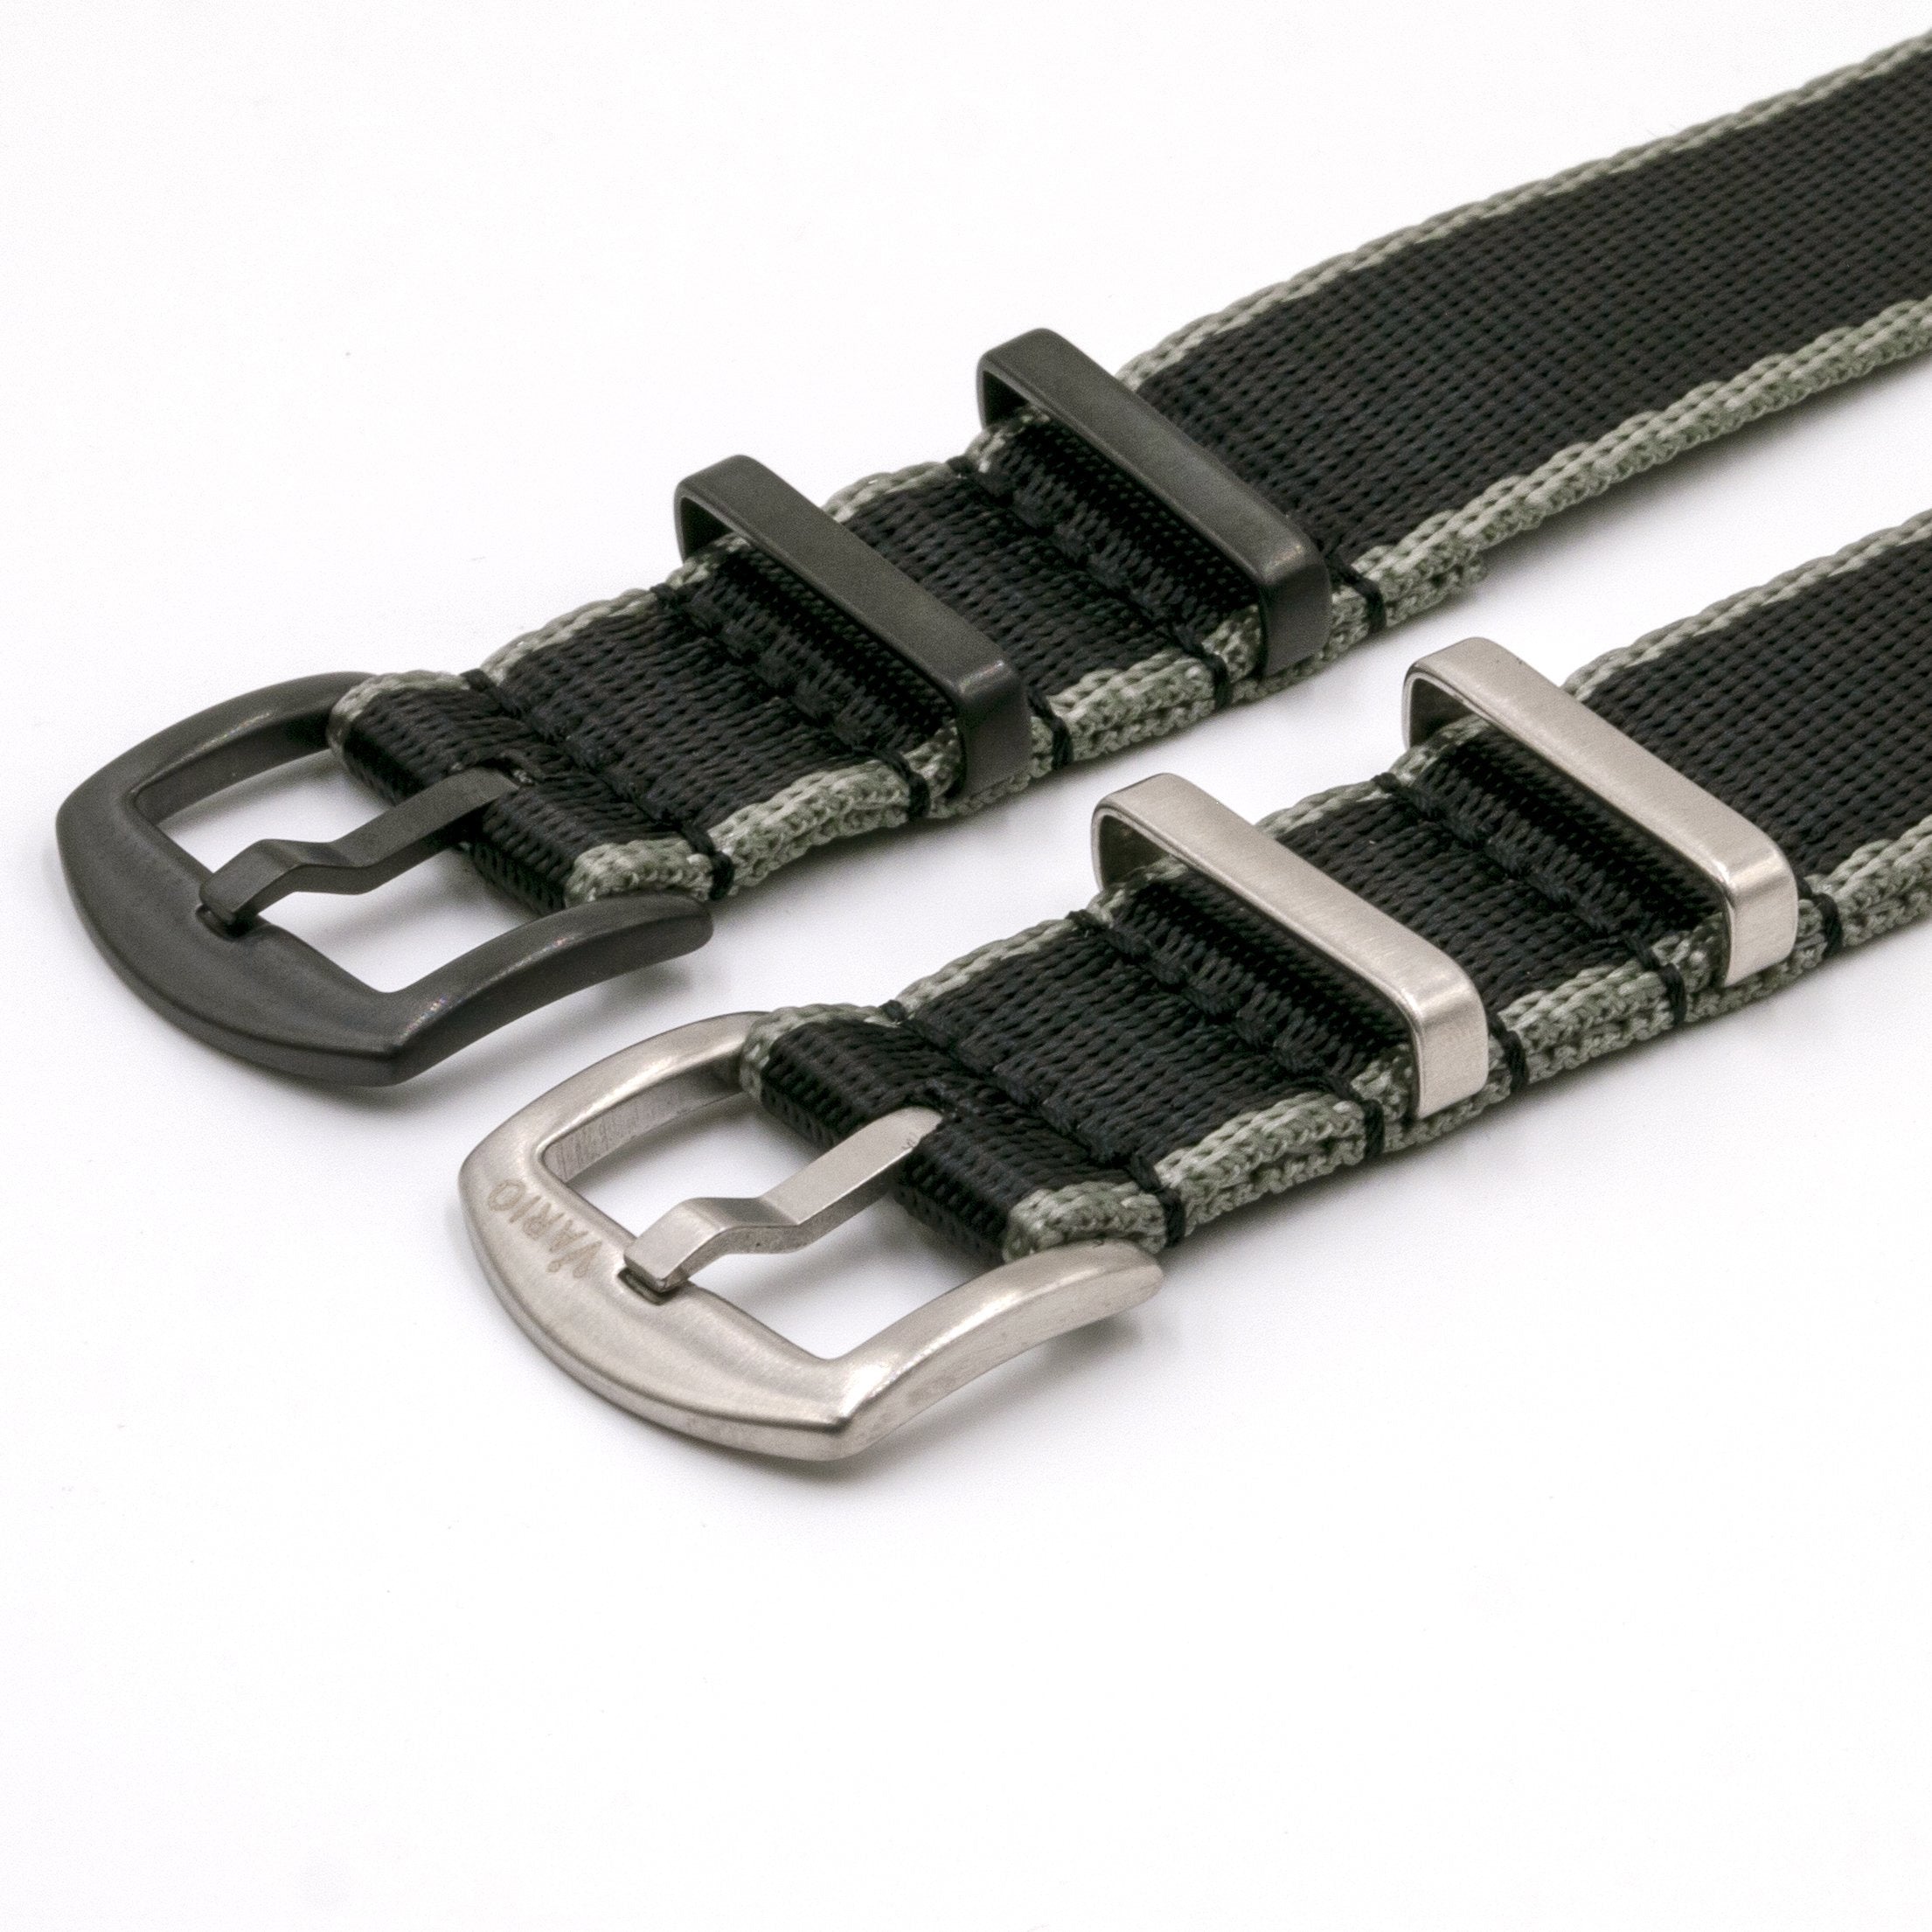 vario gshock seat belt adapter kit black and grey stripe silver and black buckle